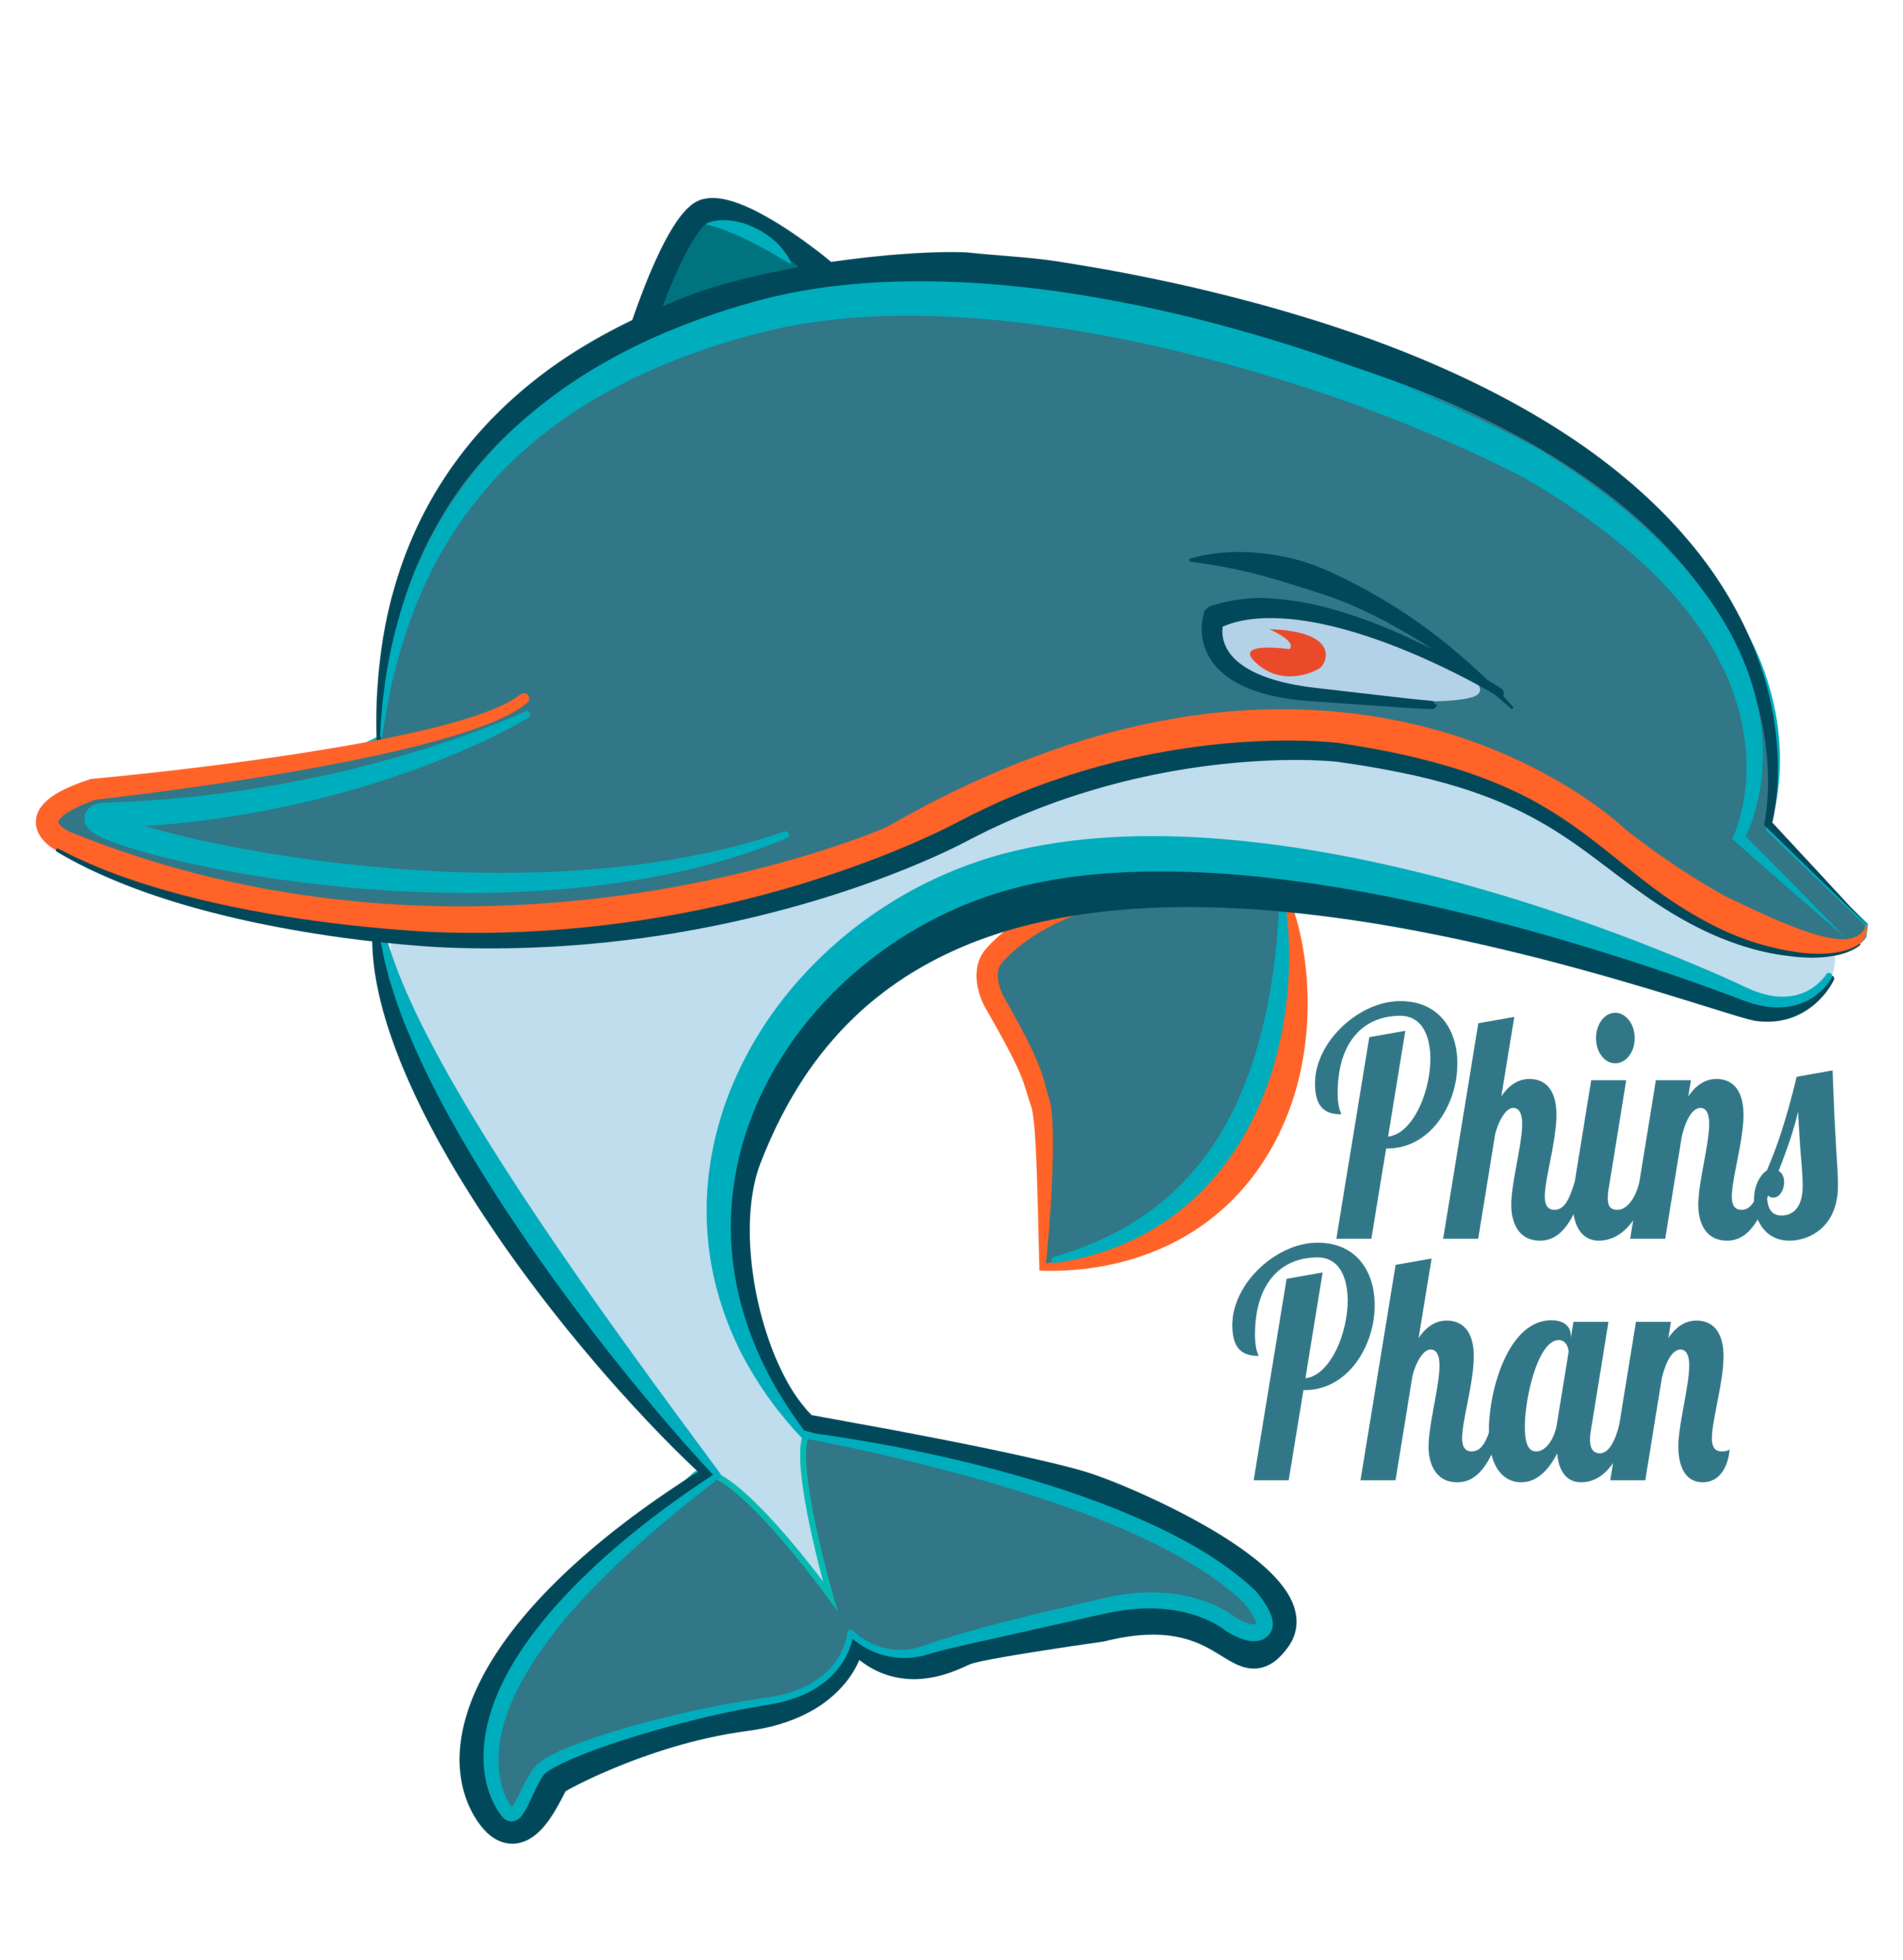 Miami Dolphins News - Go Phins (2913x3000)